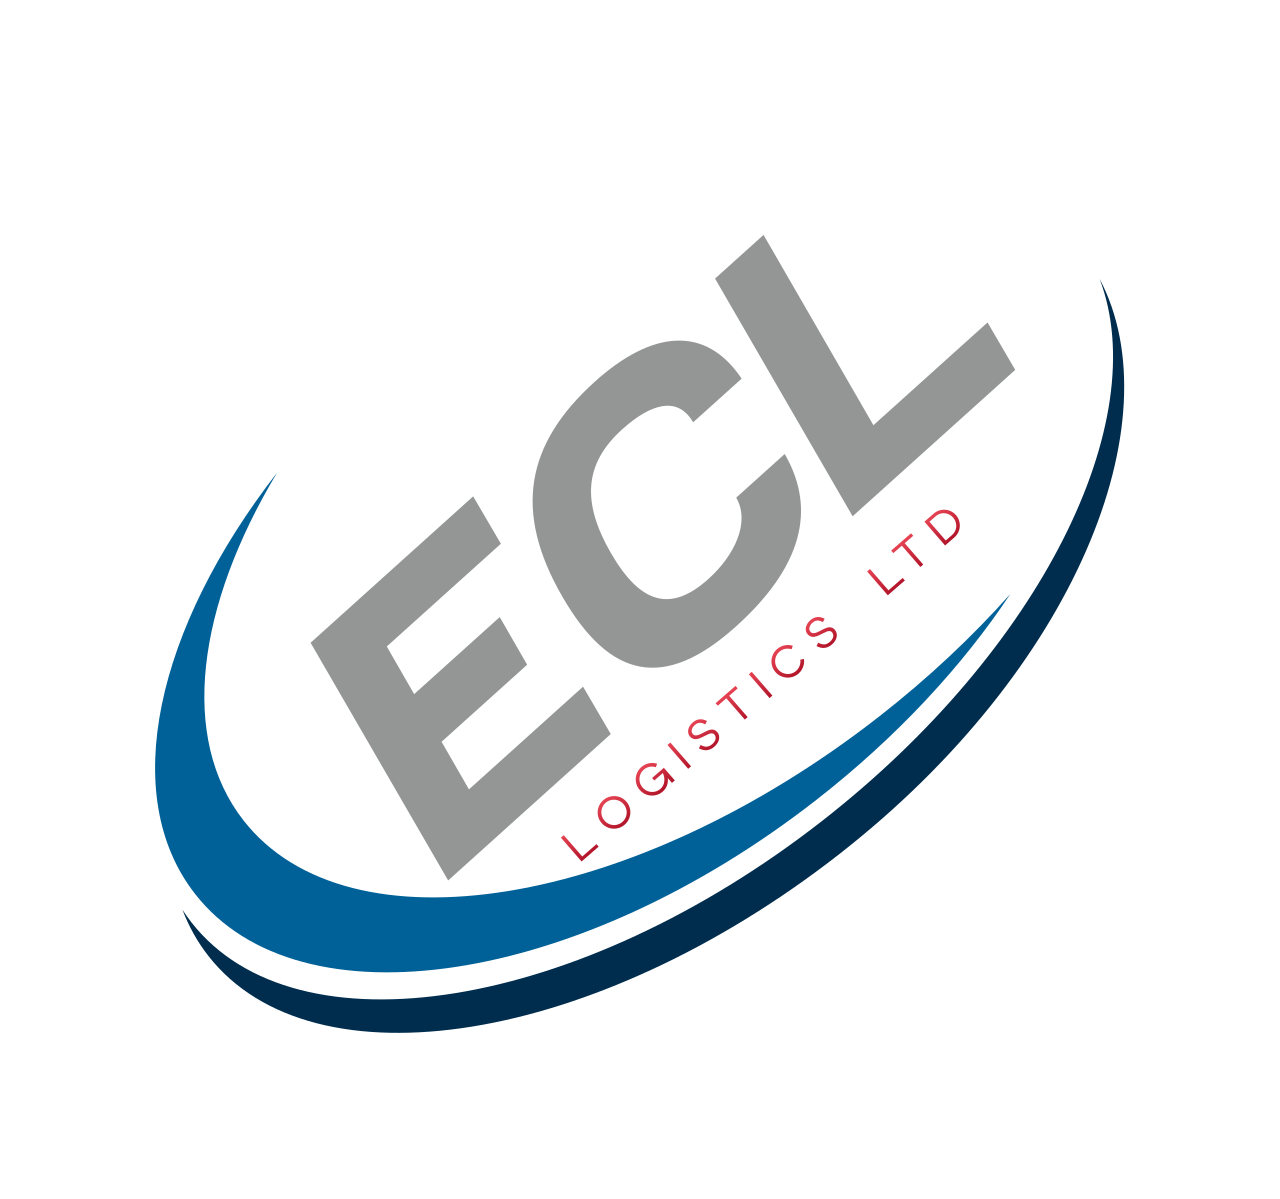 ECL 's logo